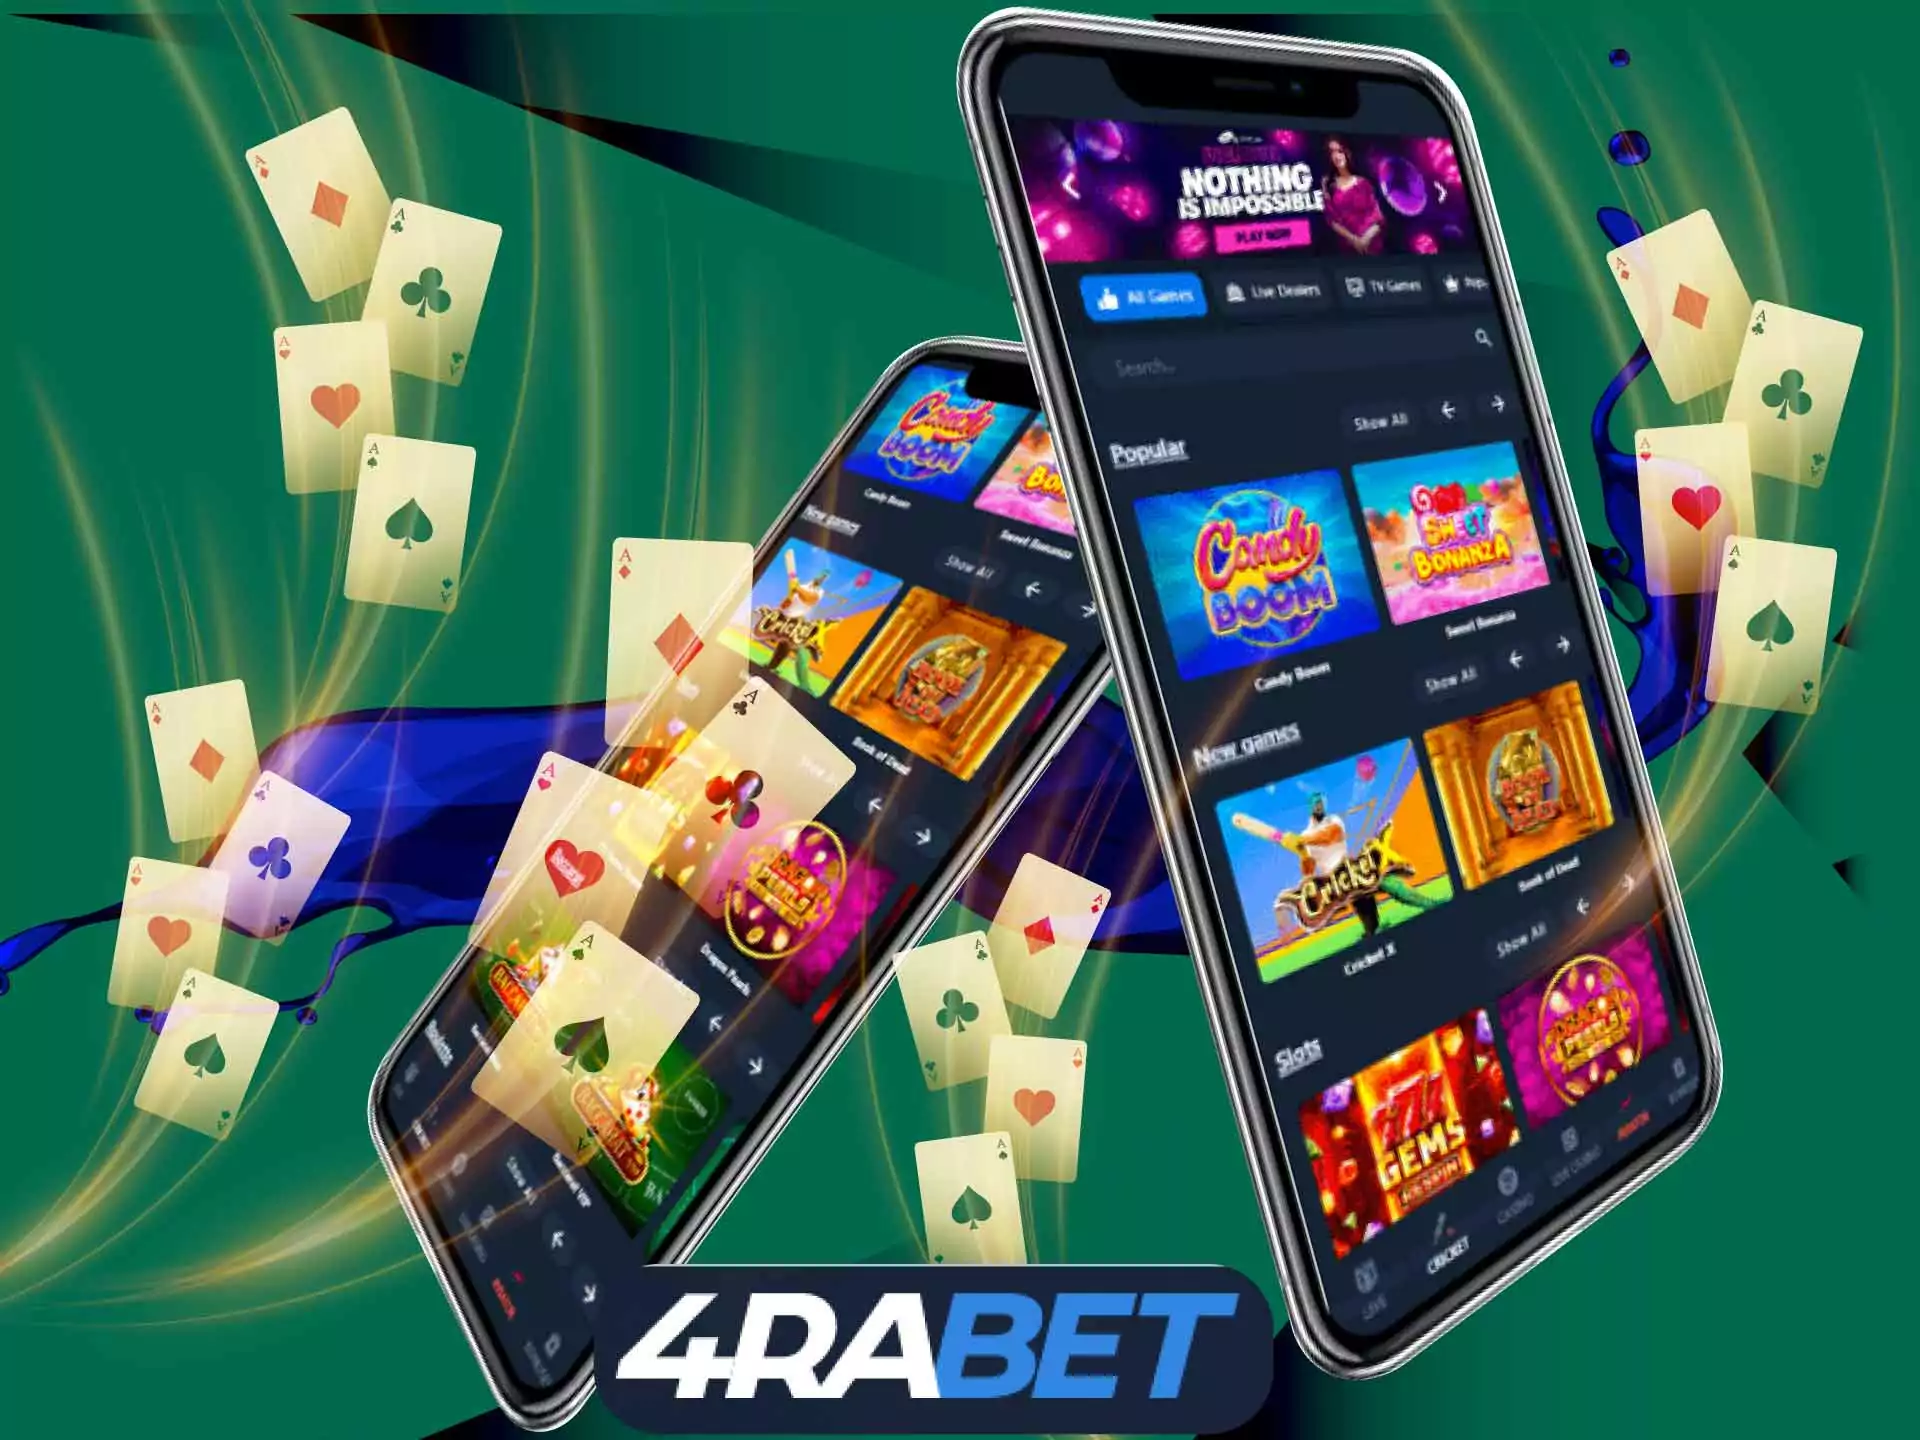 4rabet mobile app has all the same casino games.